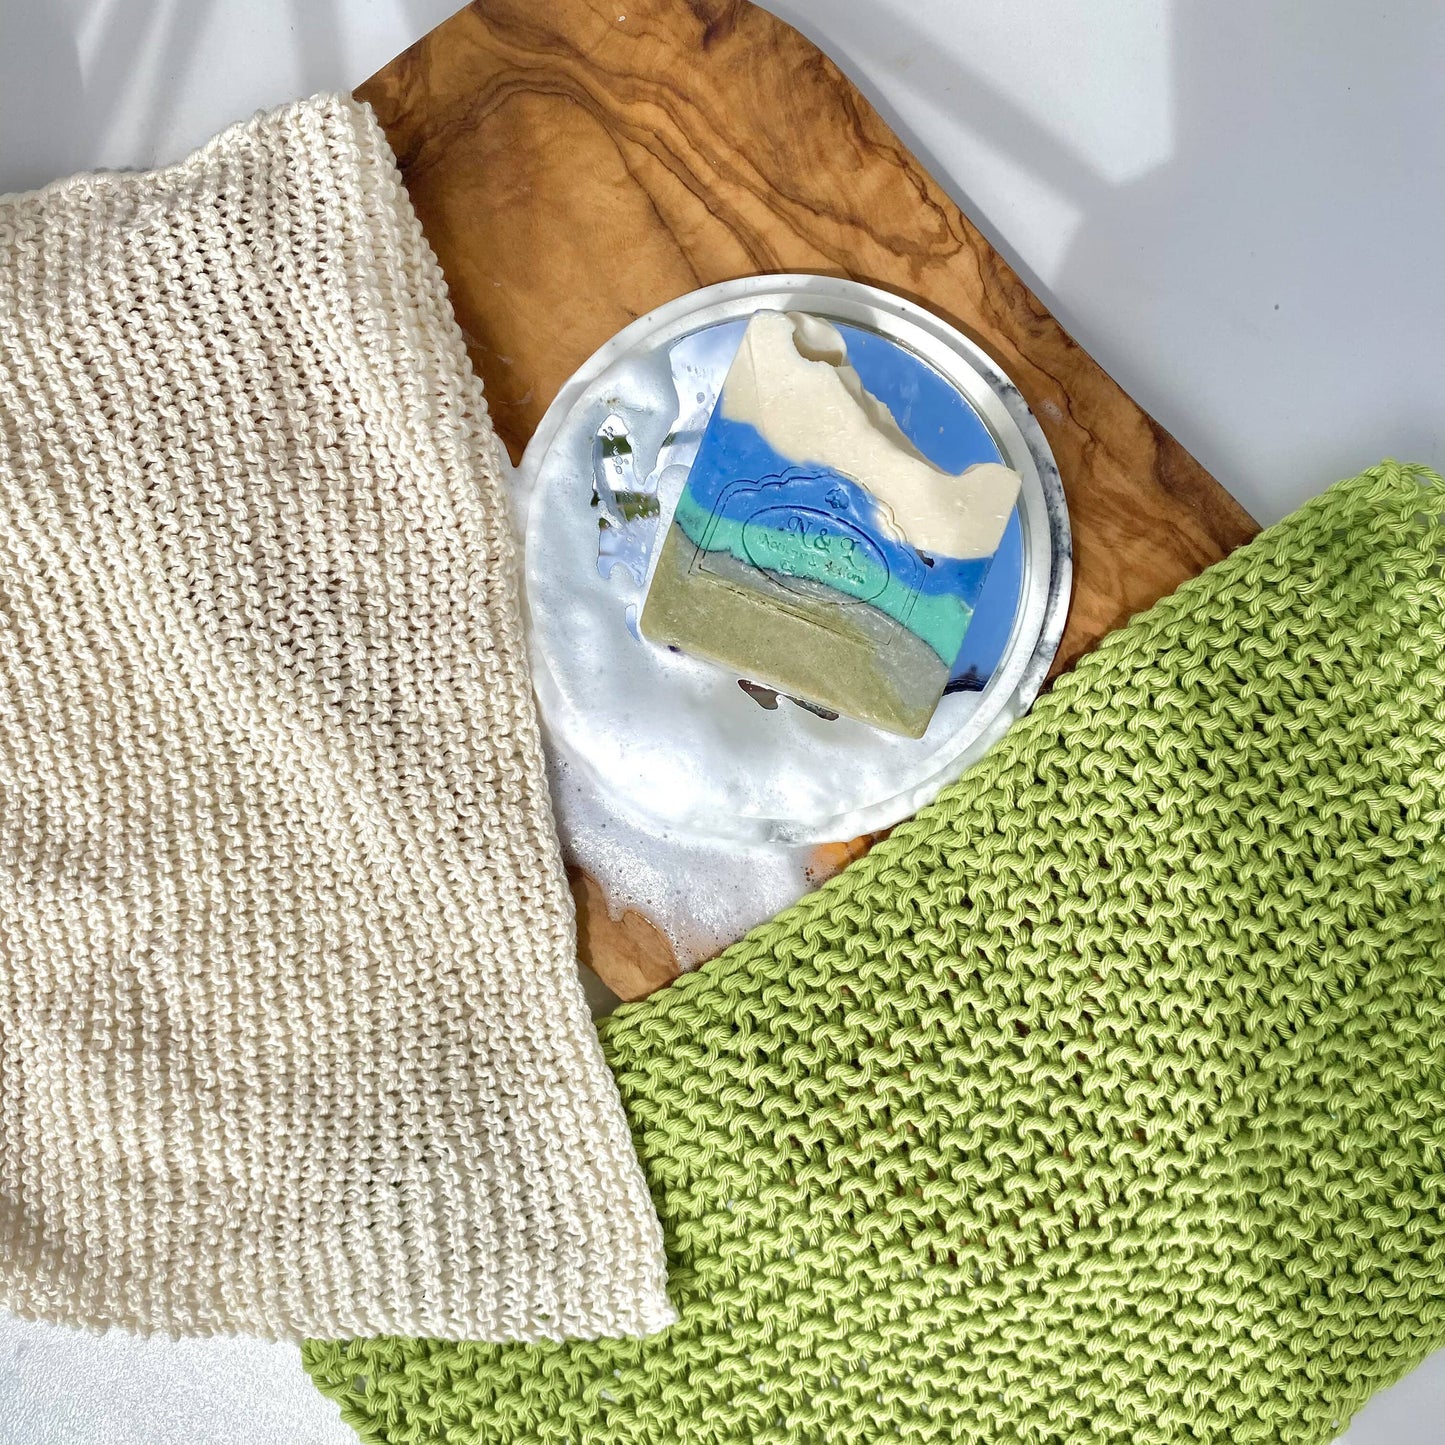 Hand Knitted Washcloth/Dishcloth